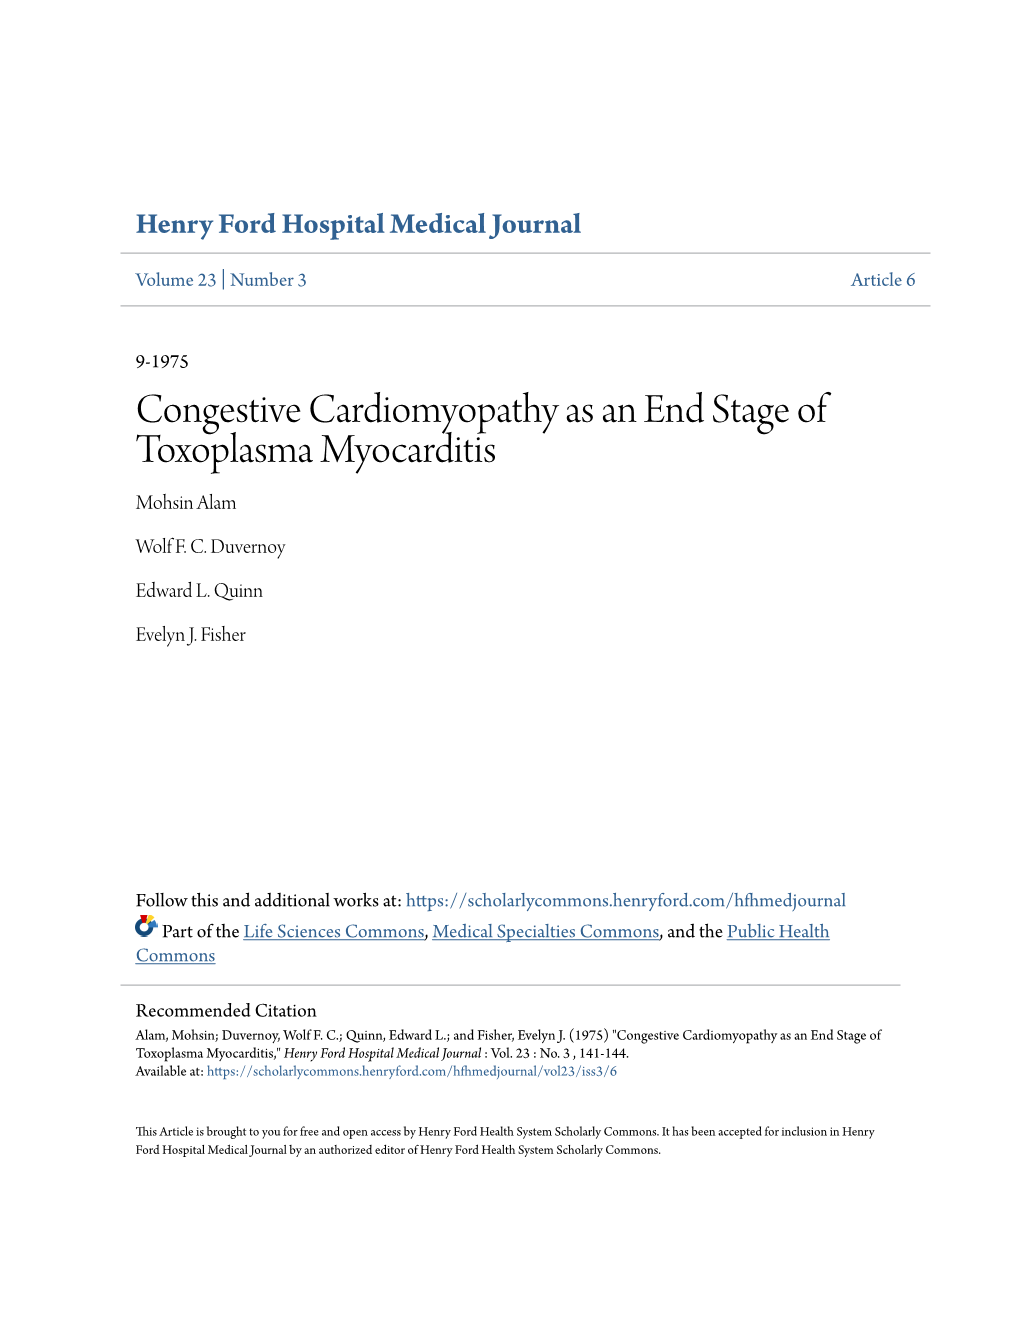 Congestive Cardiomyopathy As an End Stage of Toxoplasma Myocarditis Mohsin Alam